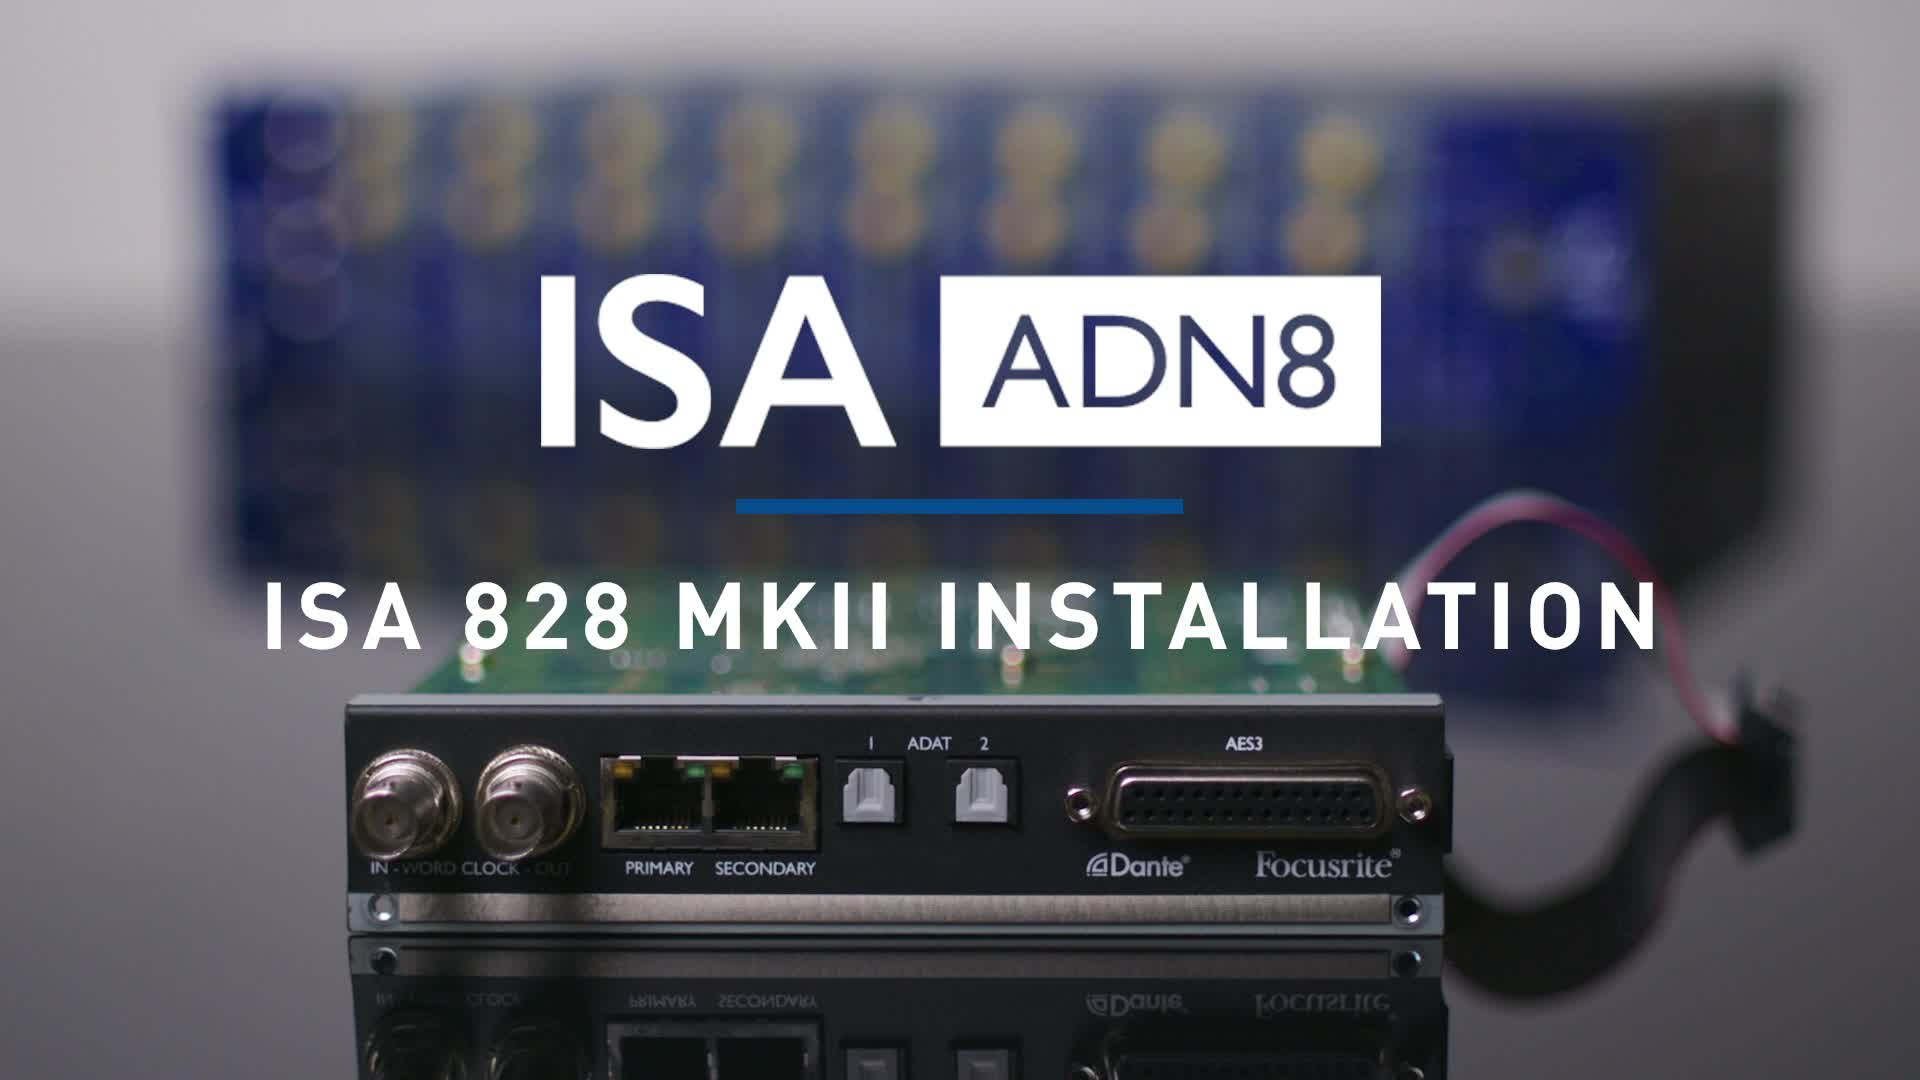 Focusrite - ISA 828 MKII ADN8 Card Installation